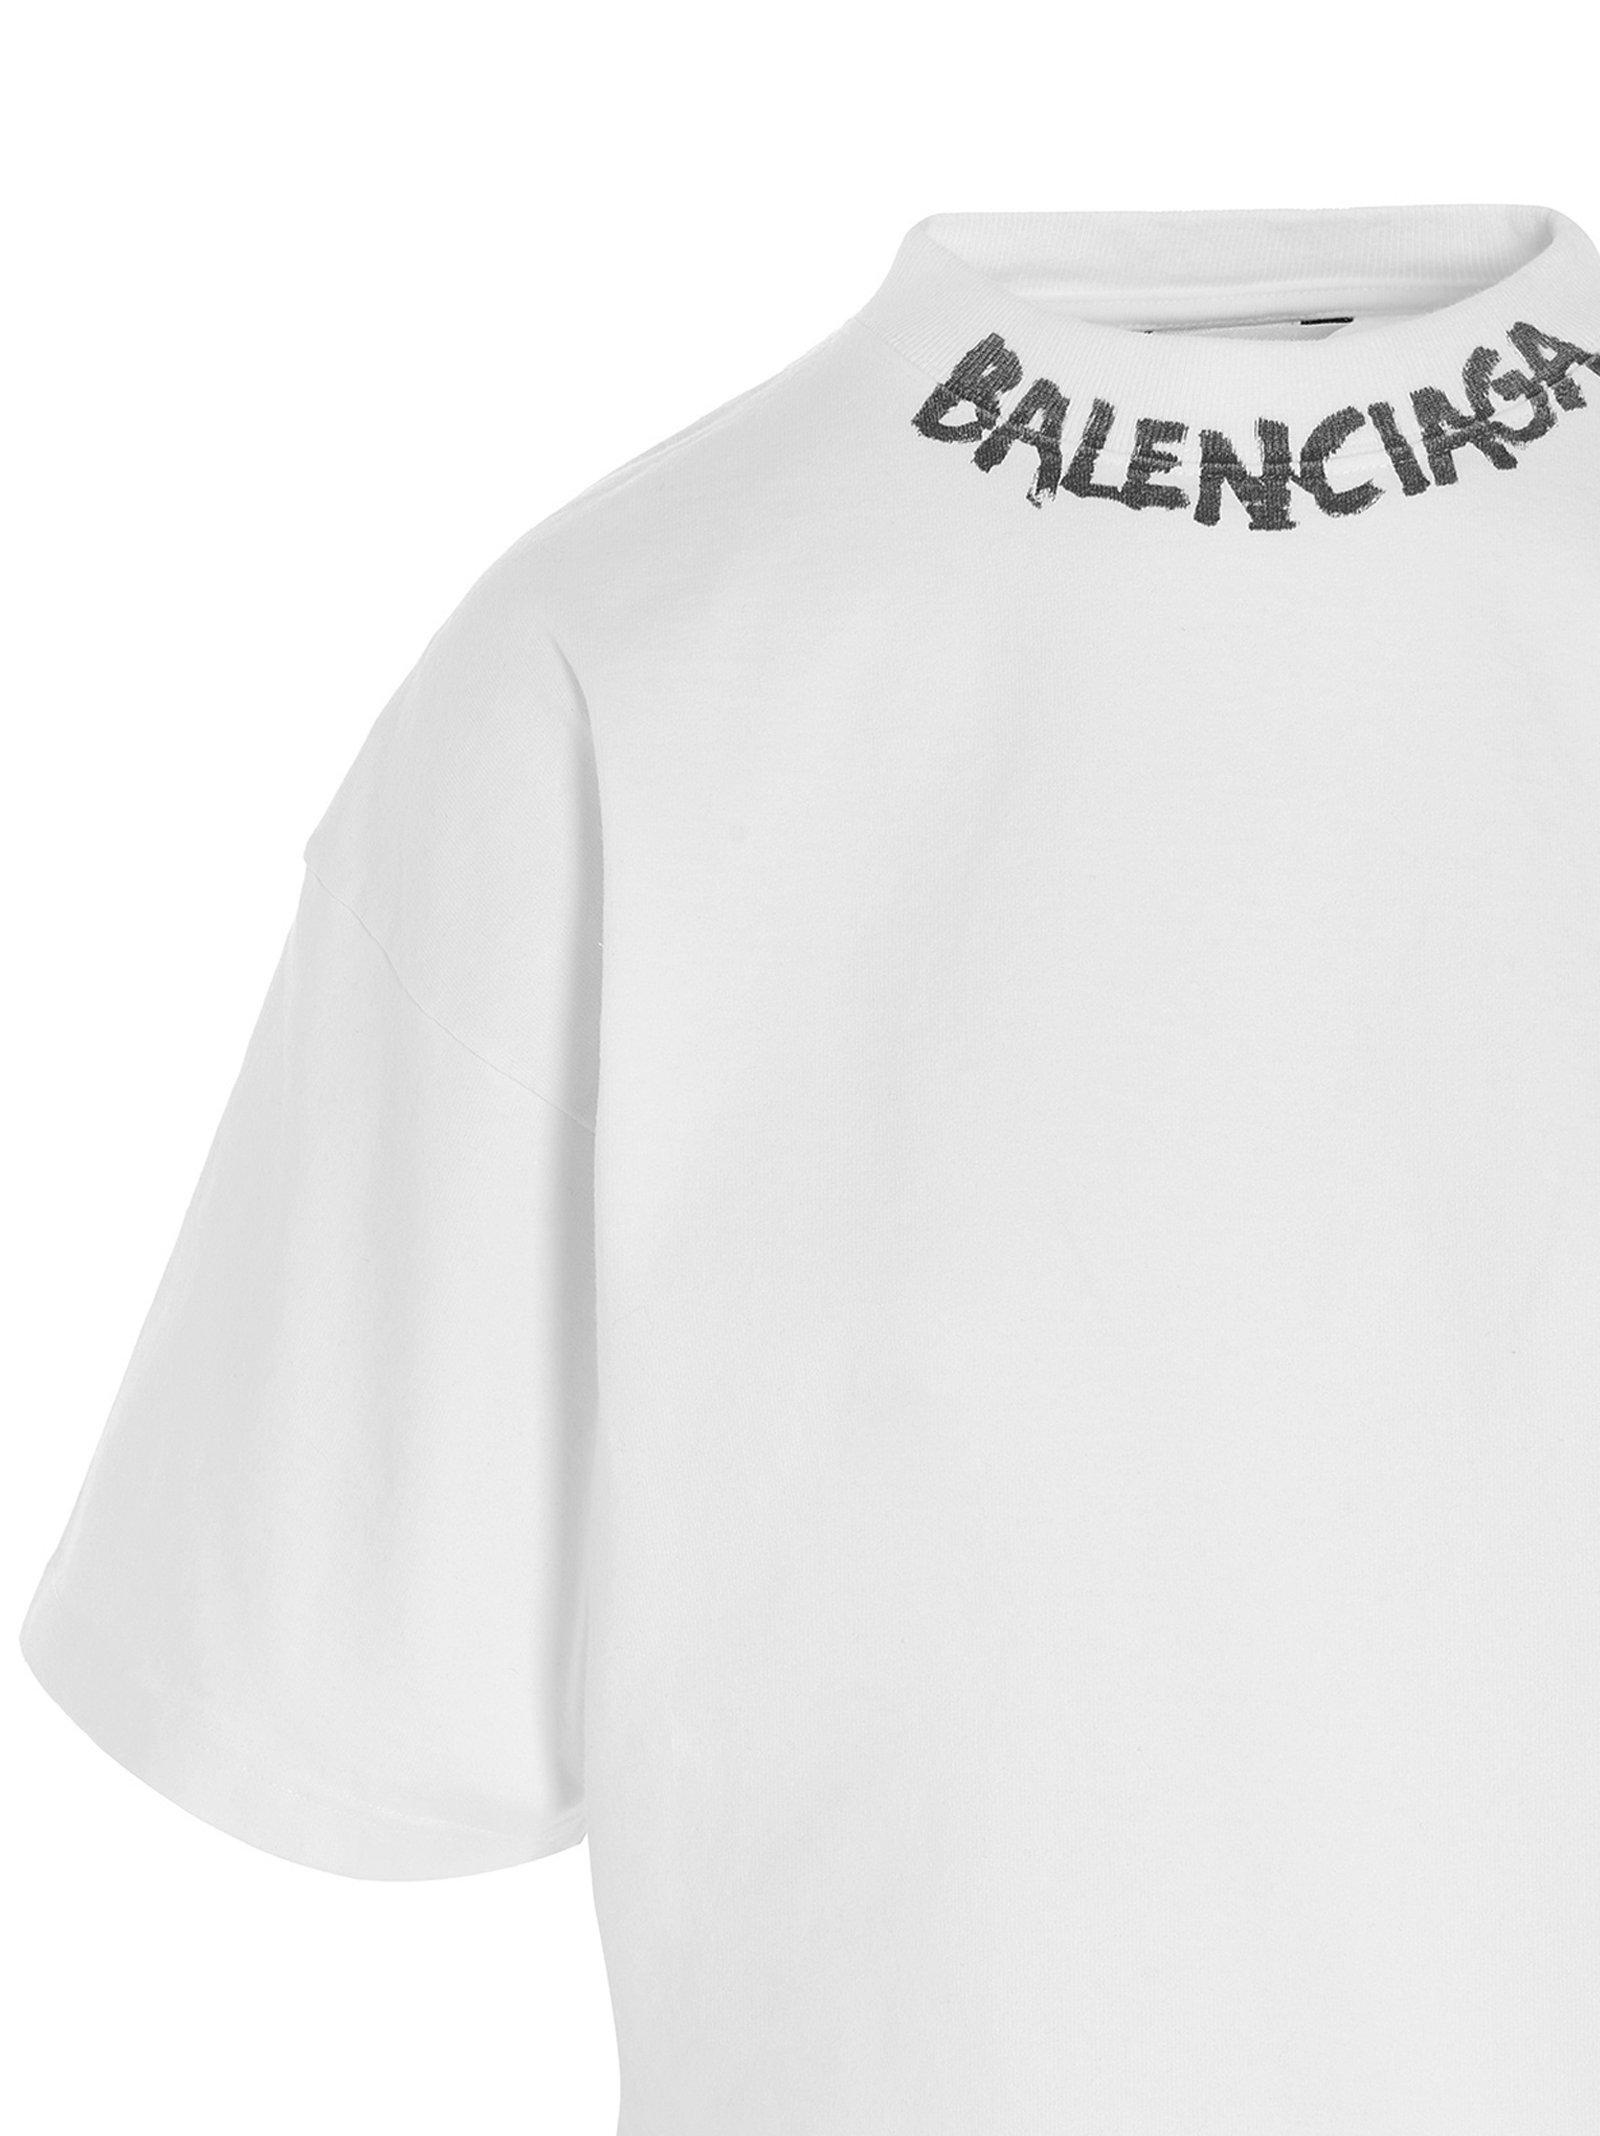 Balenciaga Scribble Logo T-shirt in White | Lyst